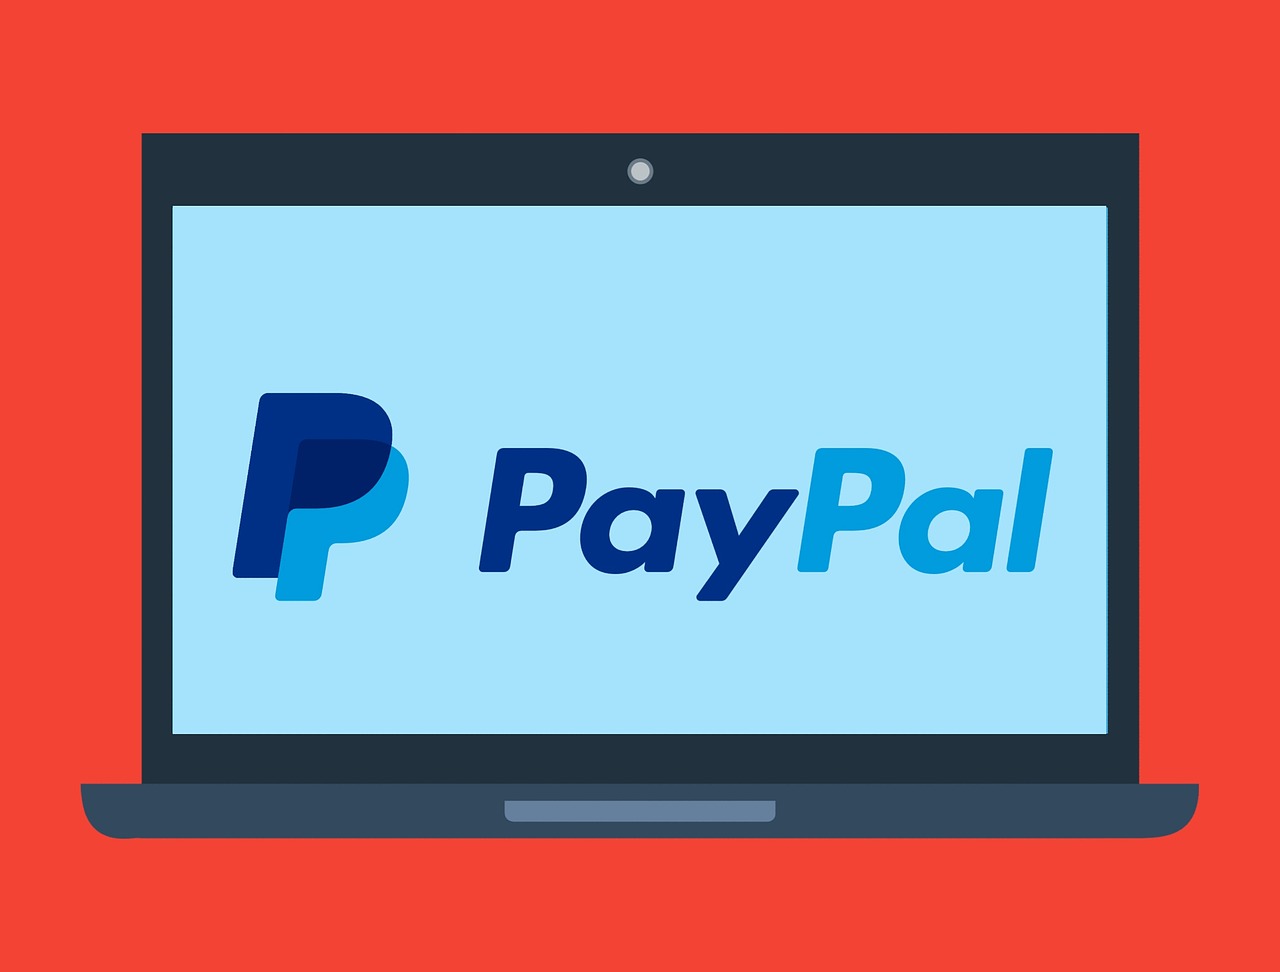 paypal, logo, brand